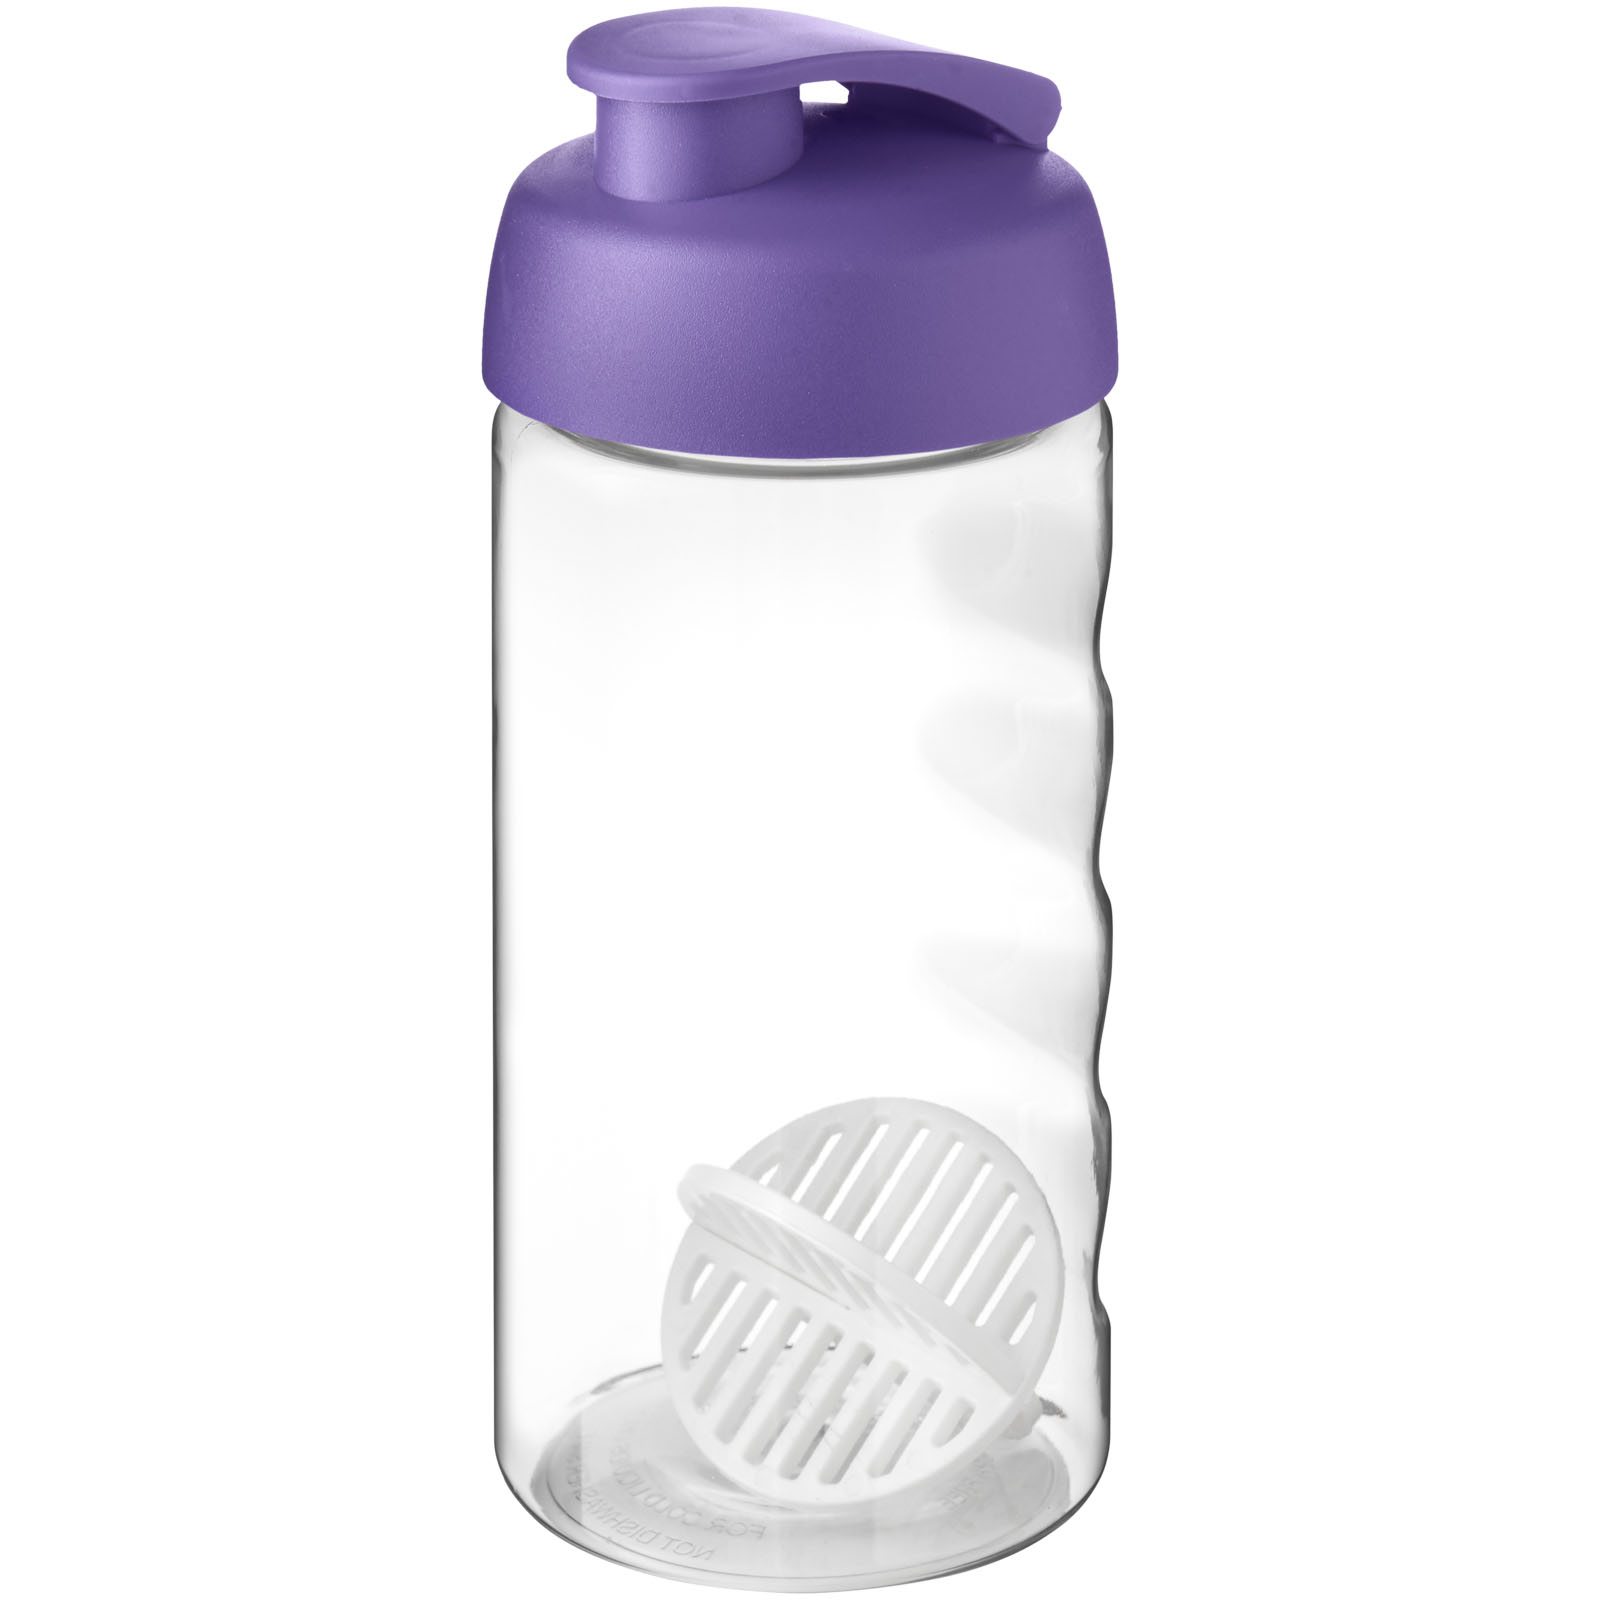 Plastic bottle NONDALTON with shaker ball